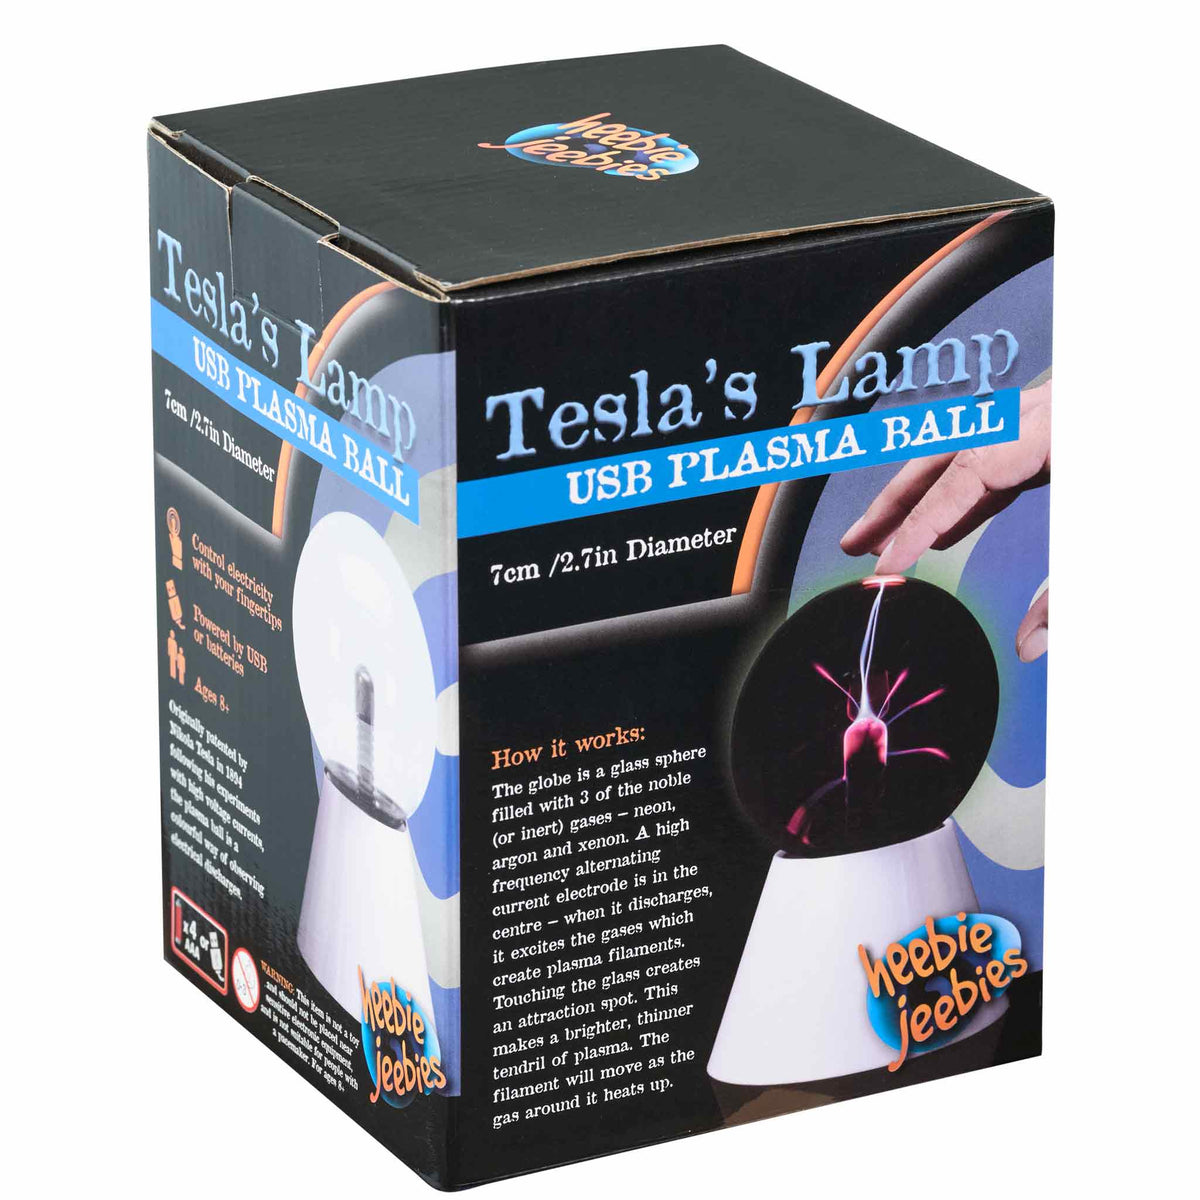 Tesla's Lamp USB Plasma Ball Cover